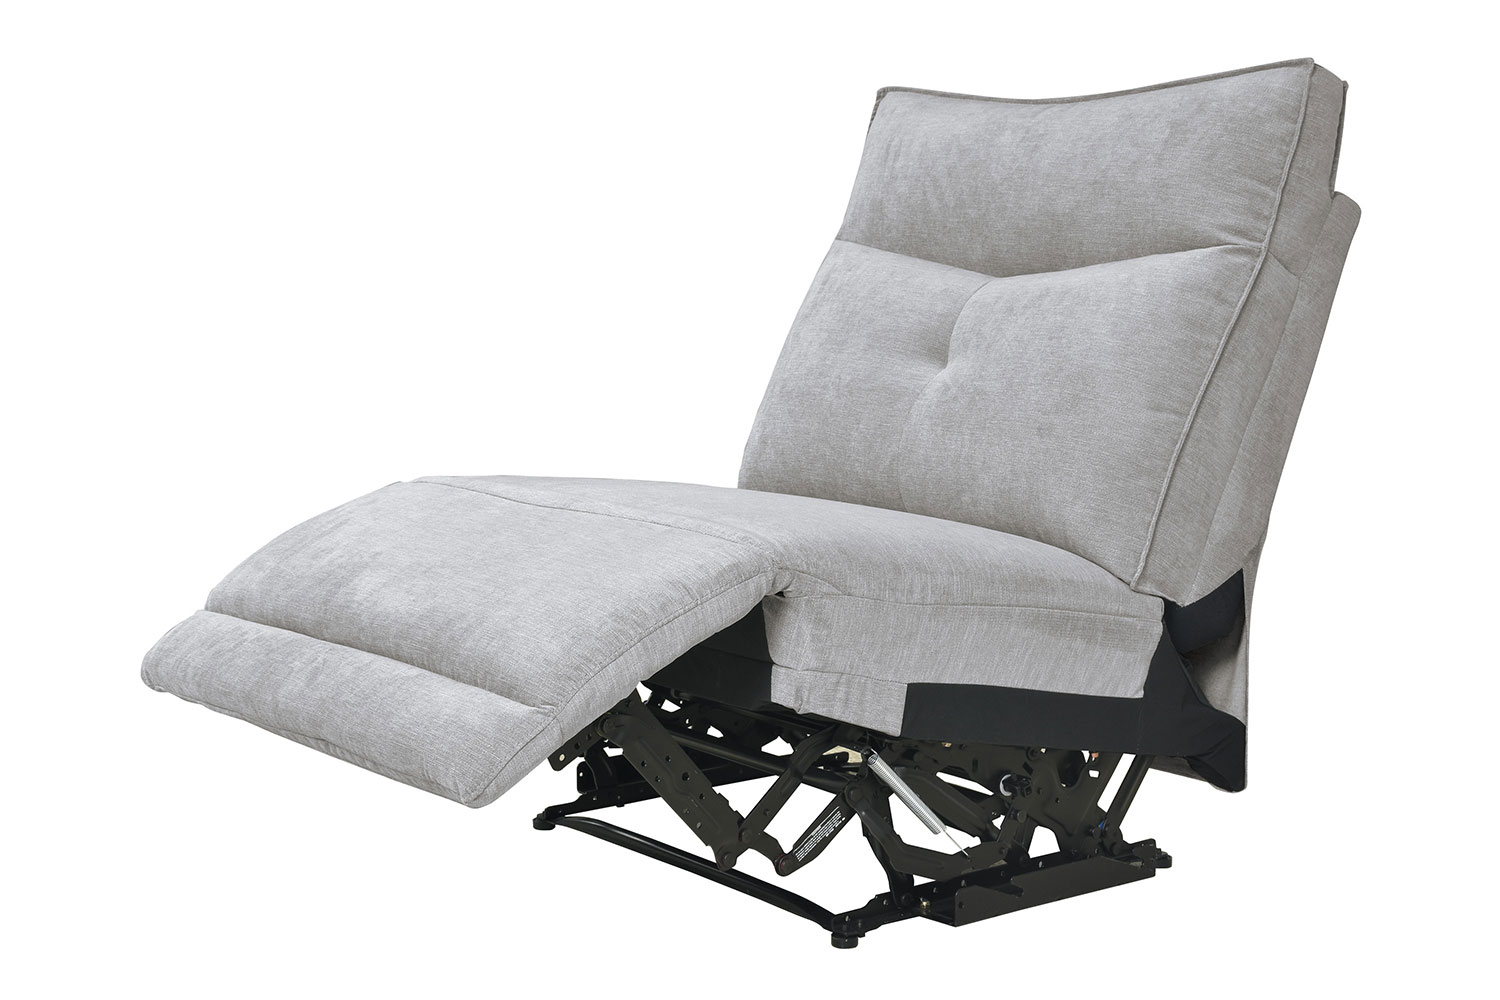 Homelegance Tesoro Armless Reclining Chair - Mist Gray